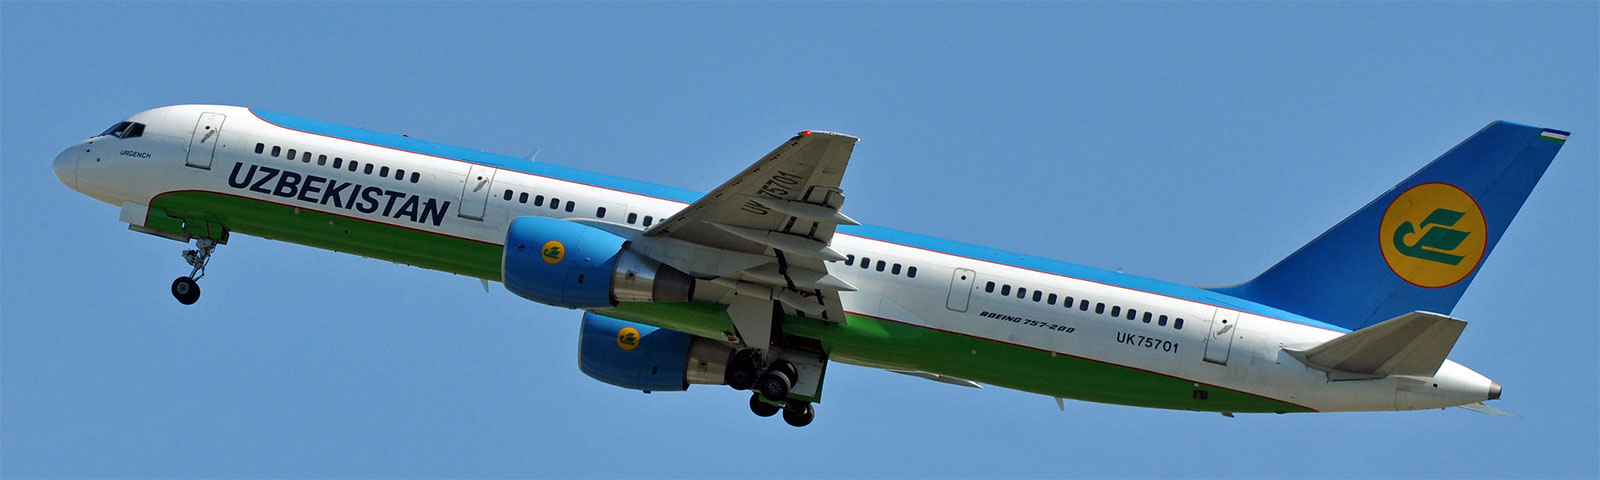 aeroplano in decollo della compagnia Uzbekistan Airways